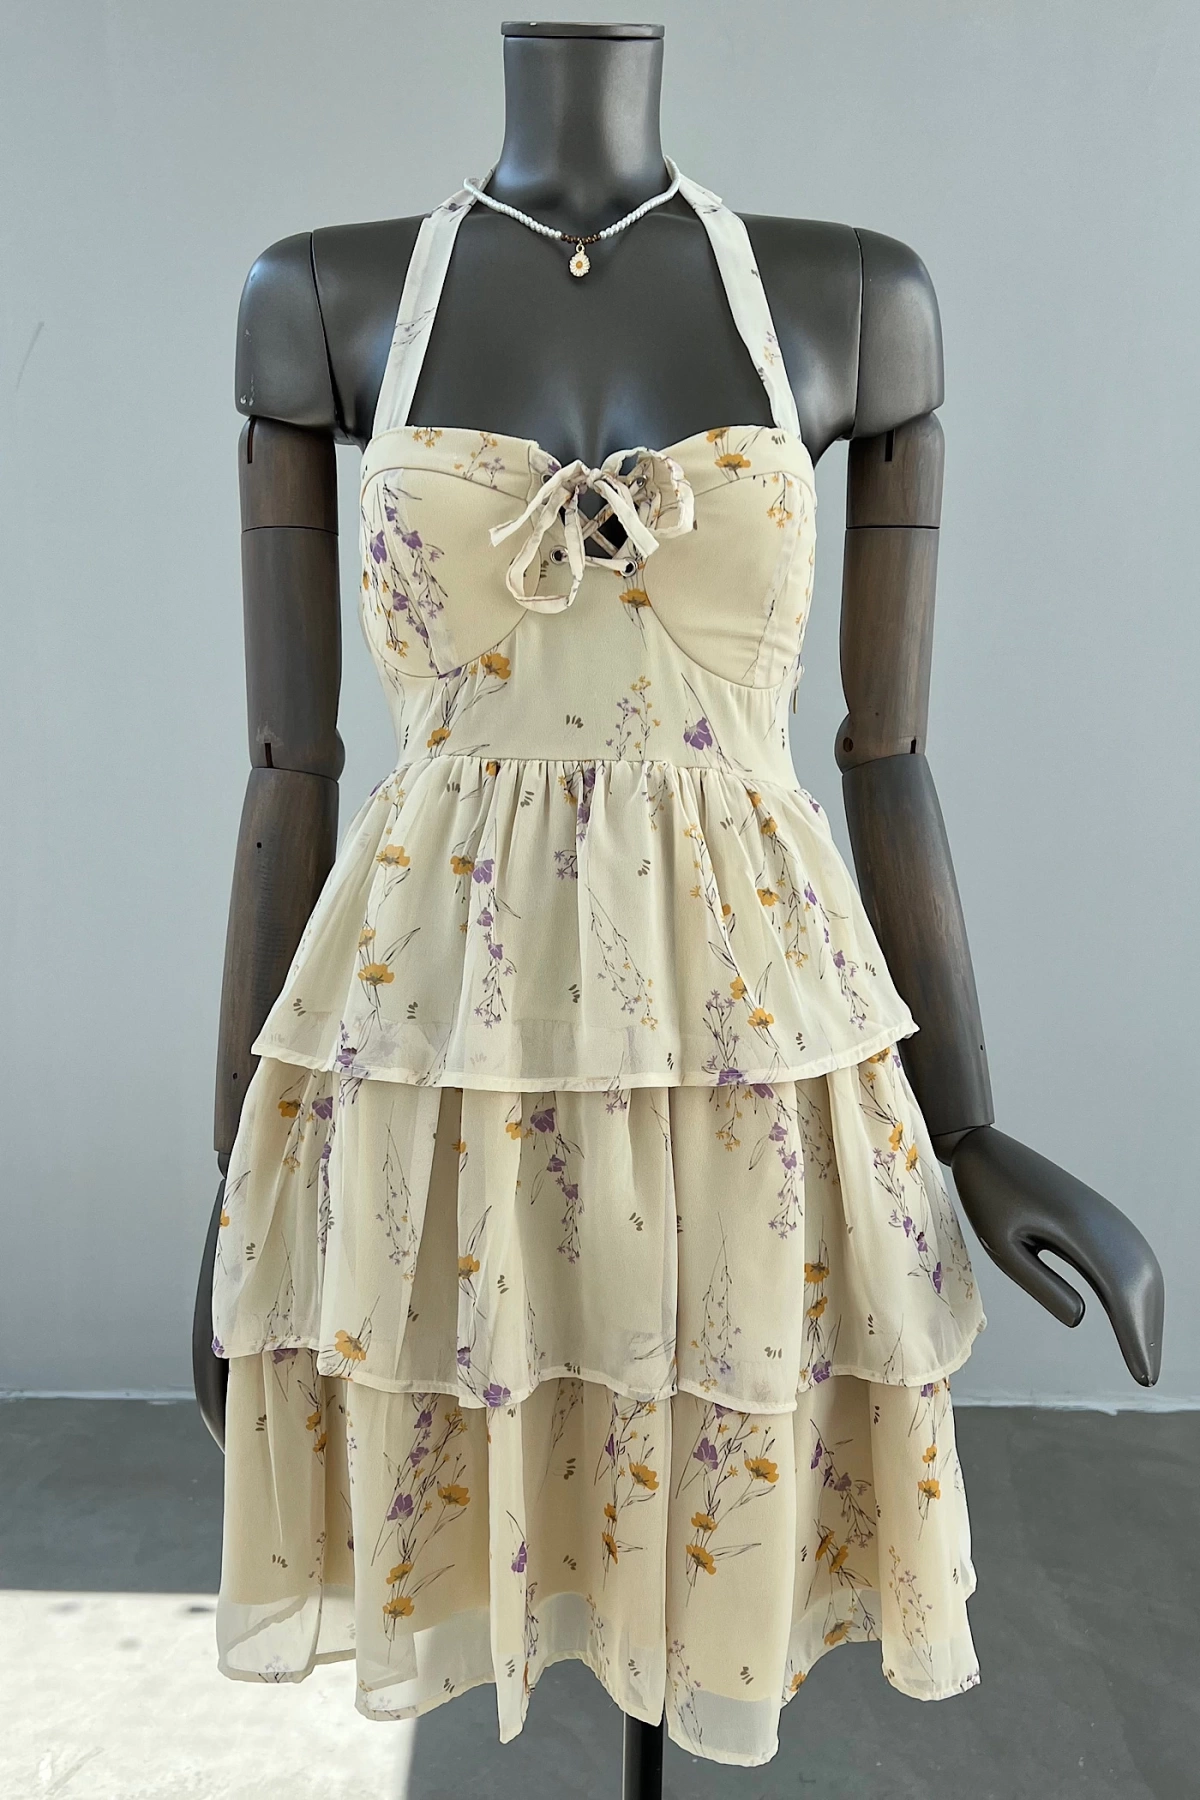 Minimal Chiffon Dress with Straps